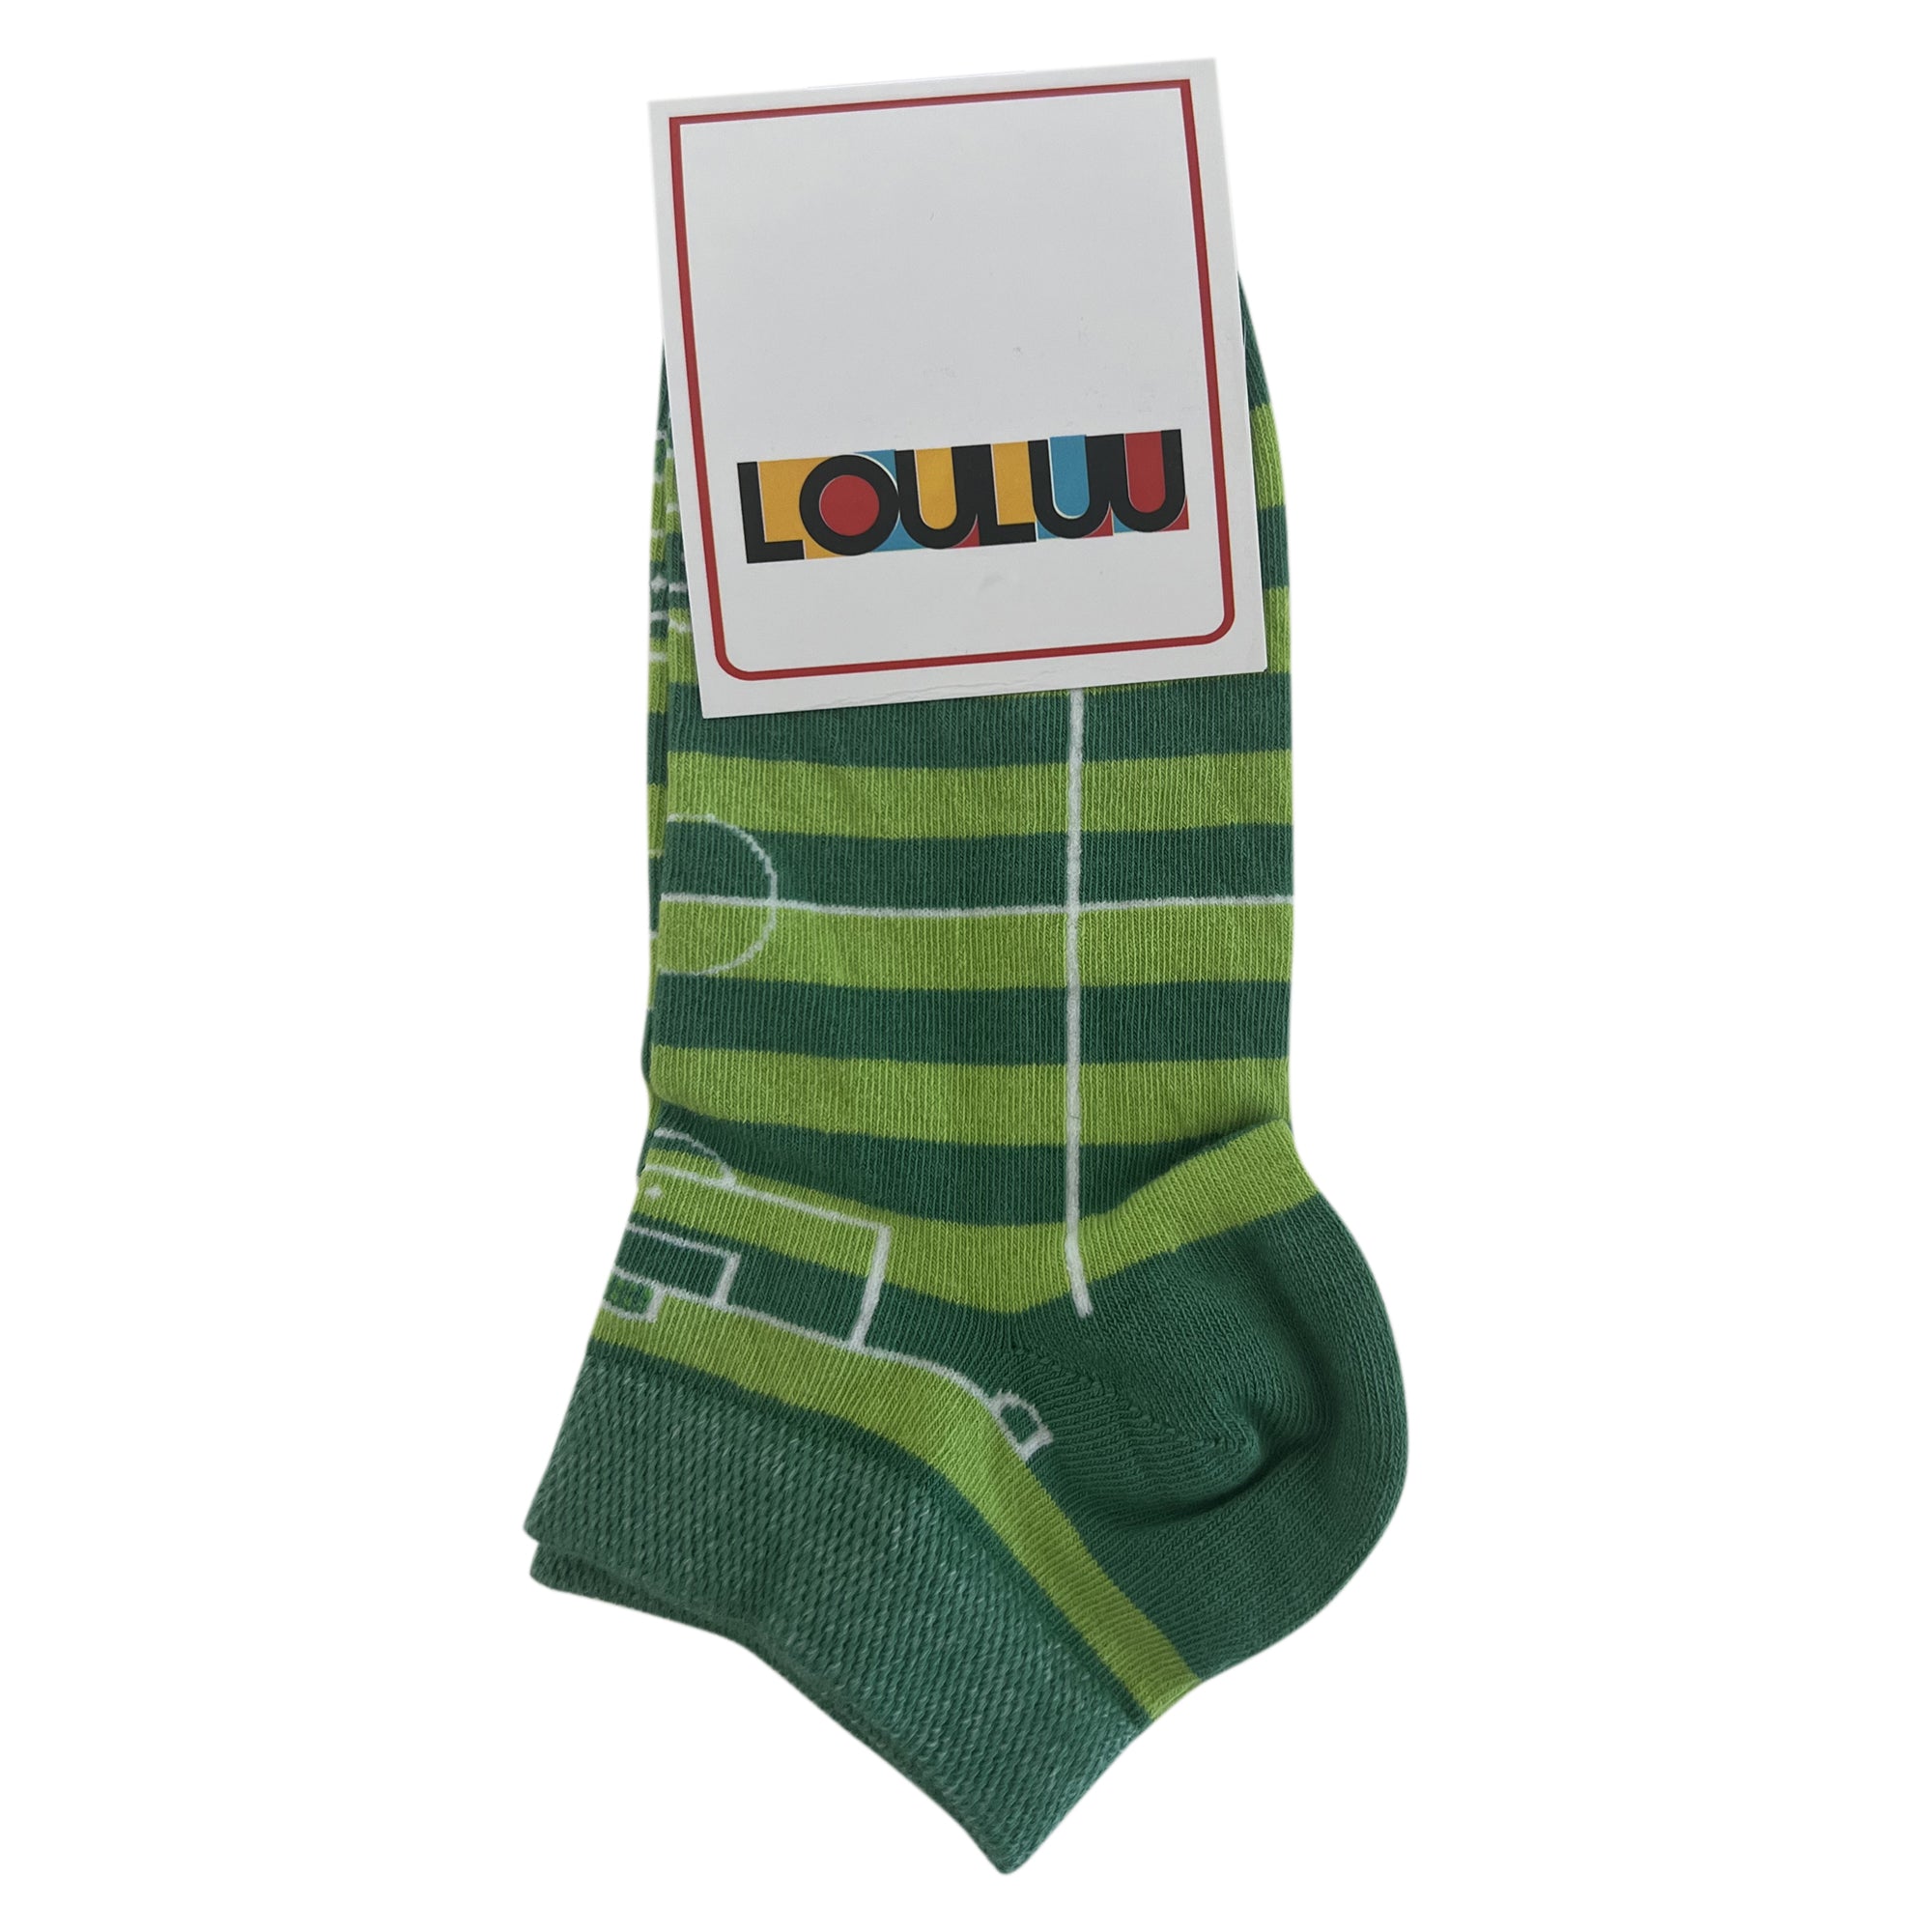 Louluu Football Low Cut Socks